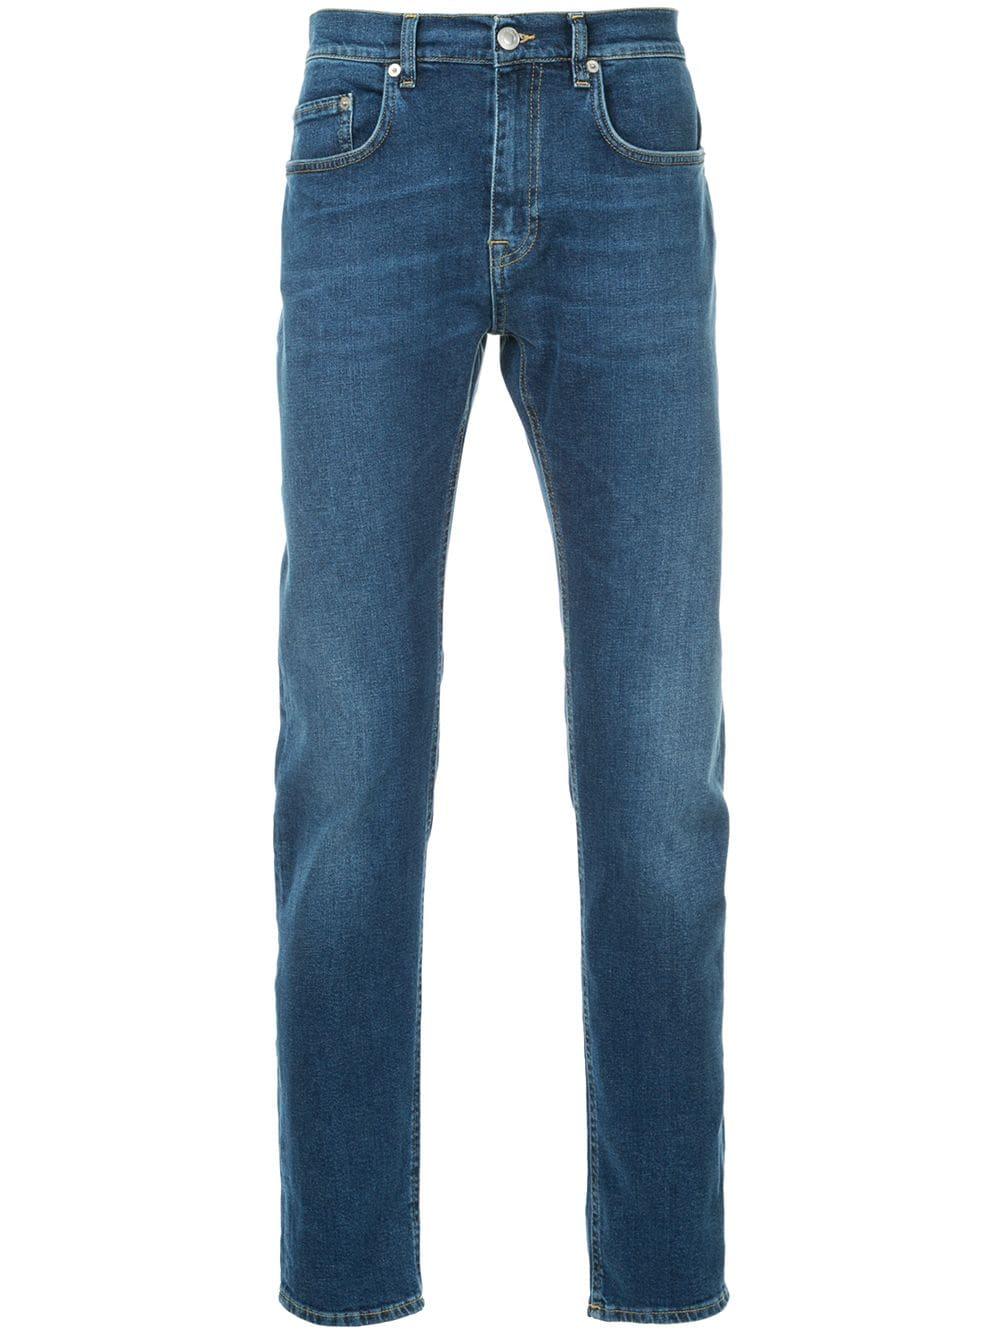 Cerruti 1881 Denim Slim-fit Jeans in Blue for Men - Lyst